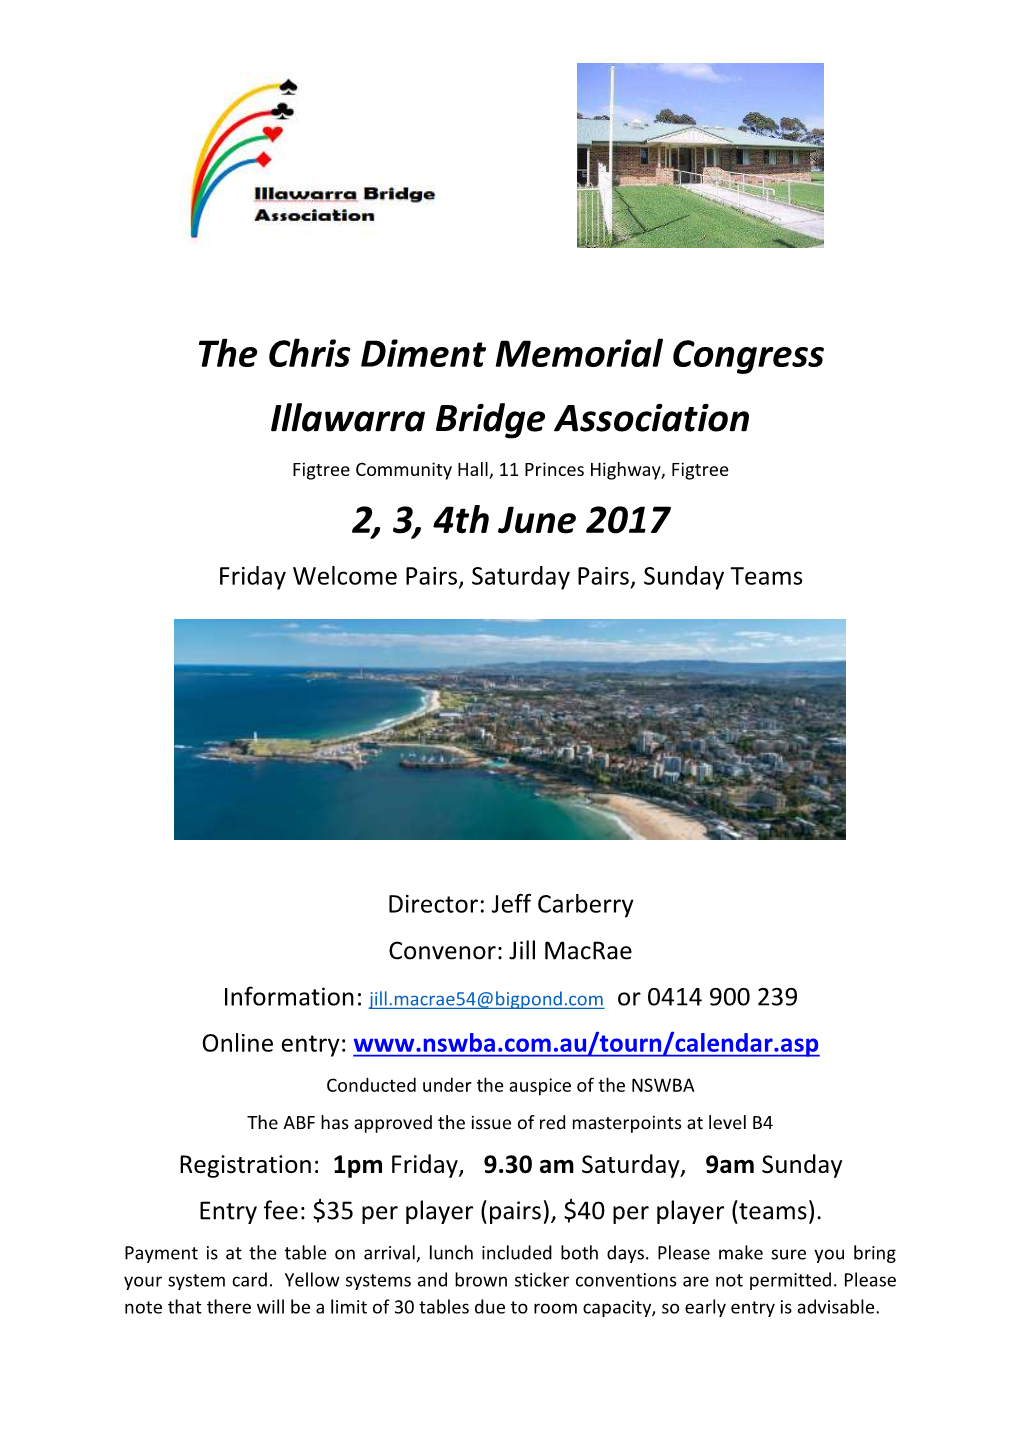 The Chris Diment Memorial Congress Illawarra Bridge Association 2, 3